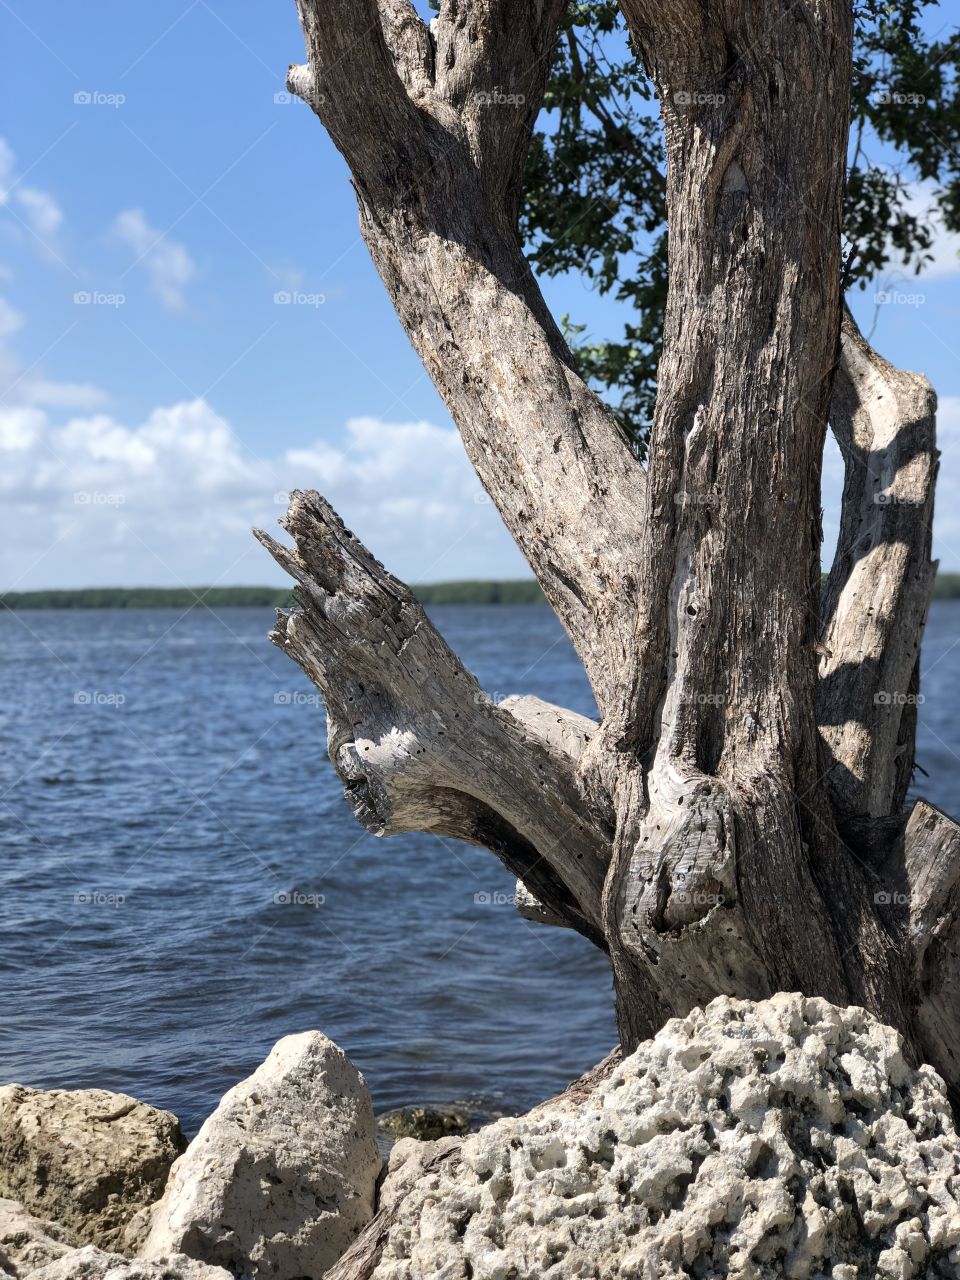 Semi-petrified tree by the ocean shore